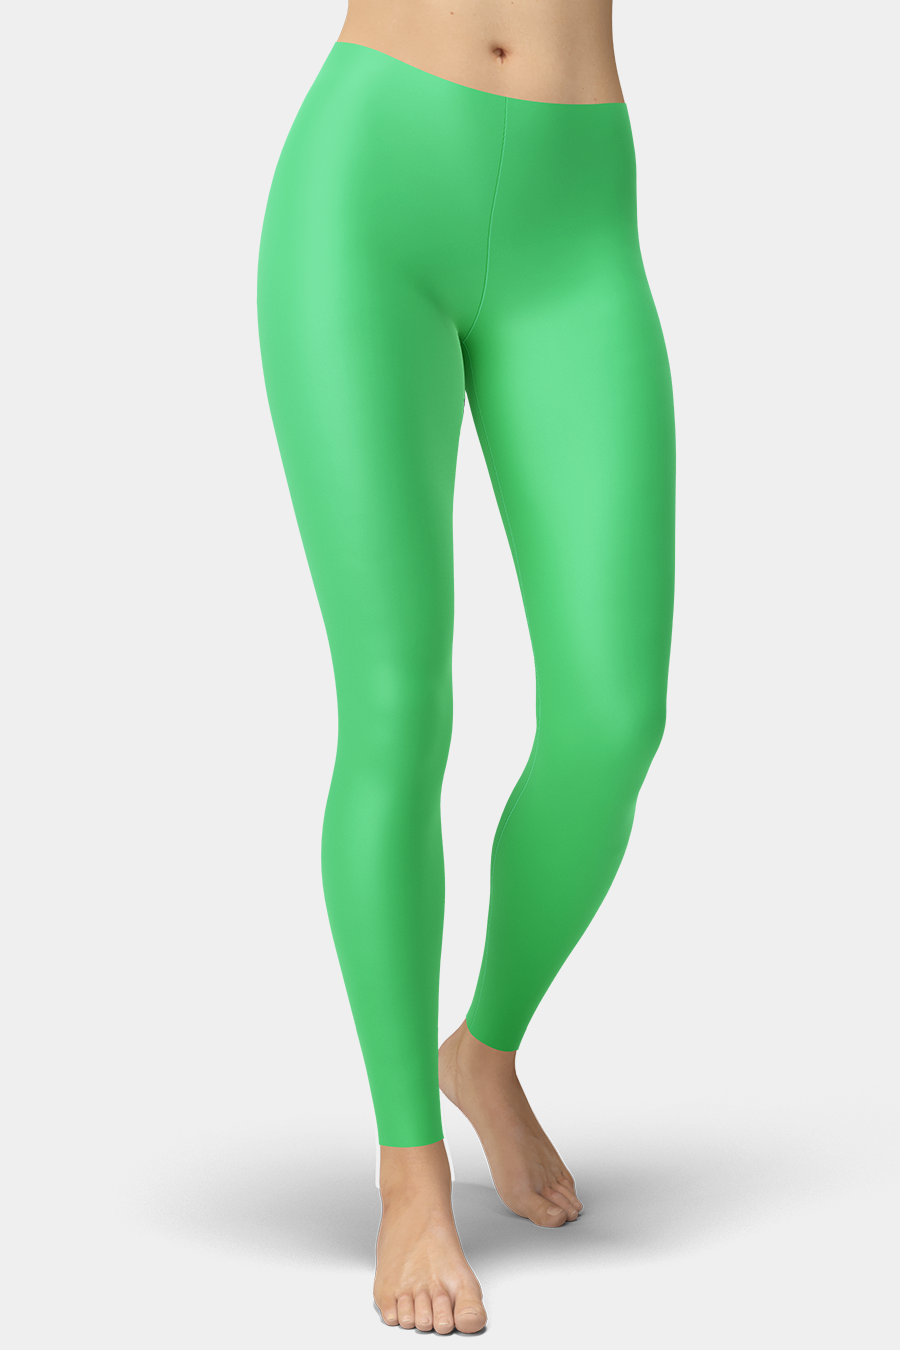 Emerald Green Leggings - SeeMyLeggings